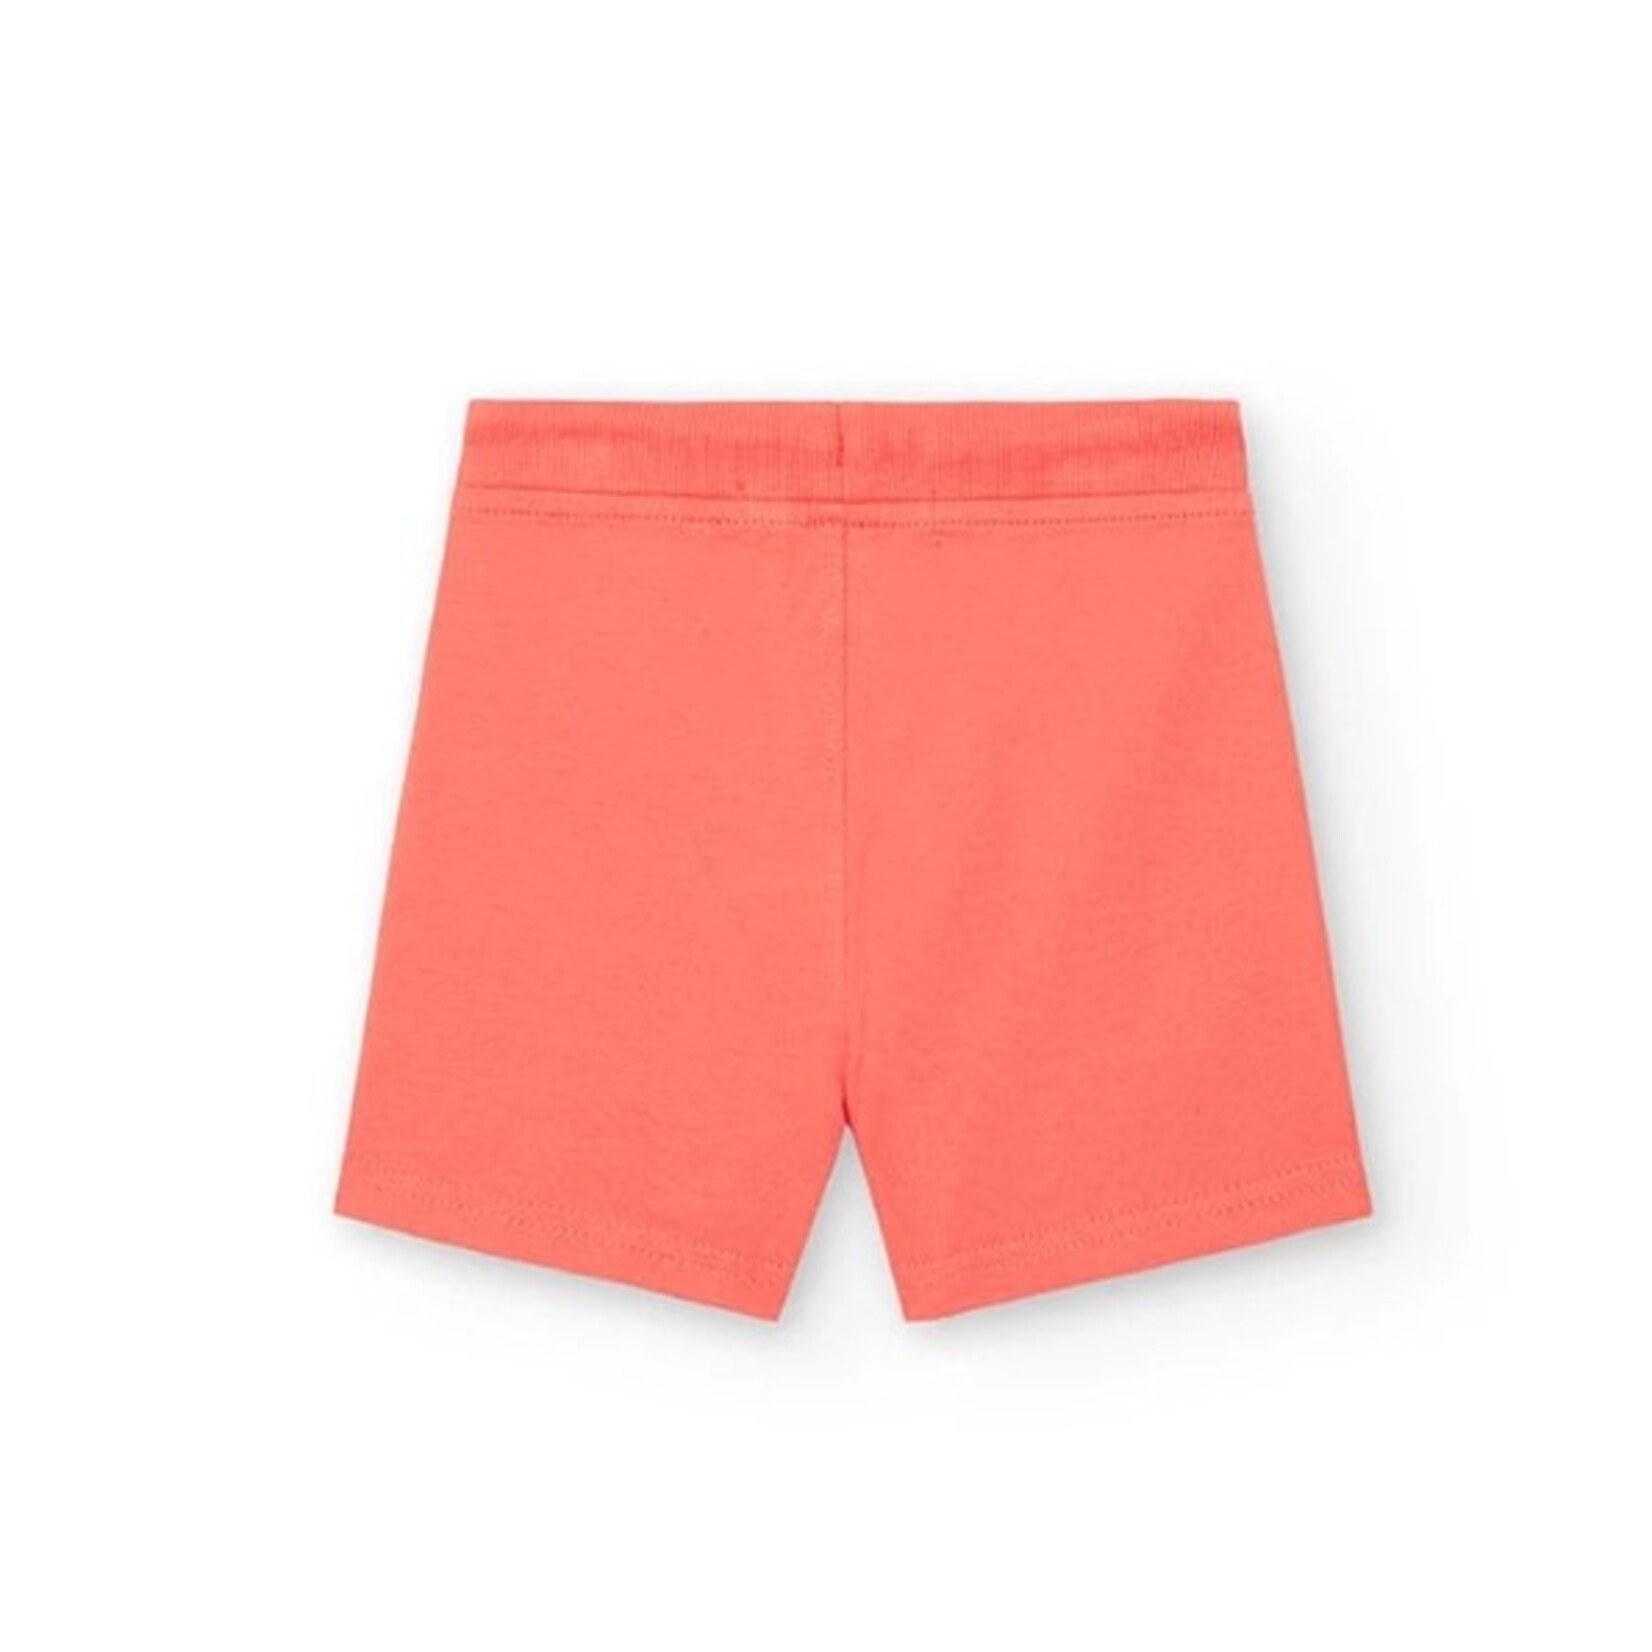 Boboli BOBOLI - Bright orange shorts with functional drawstring